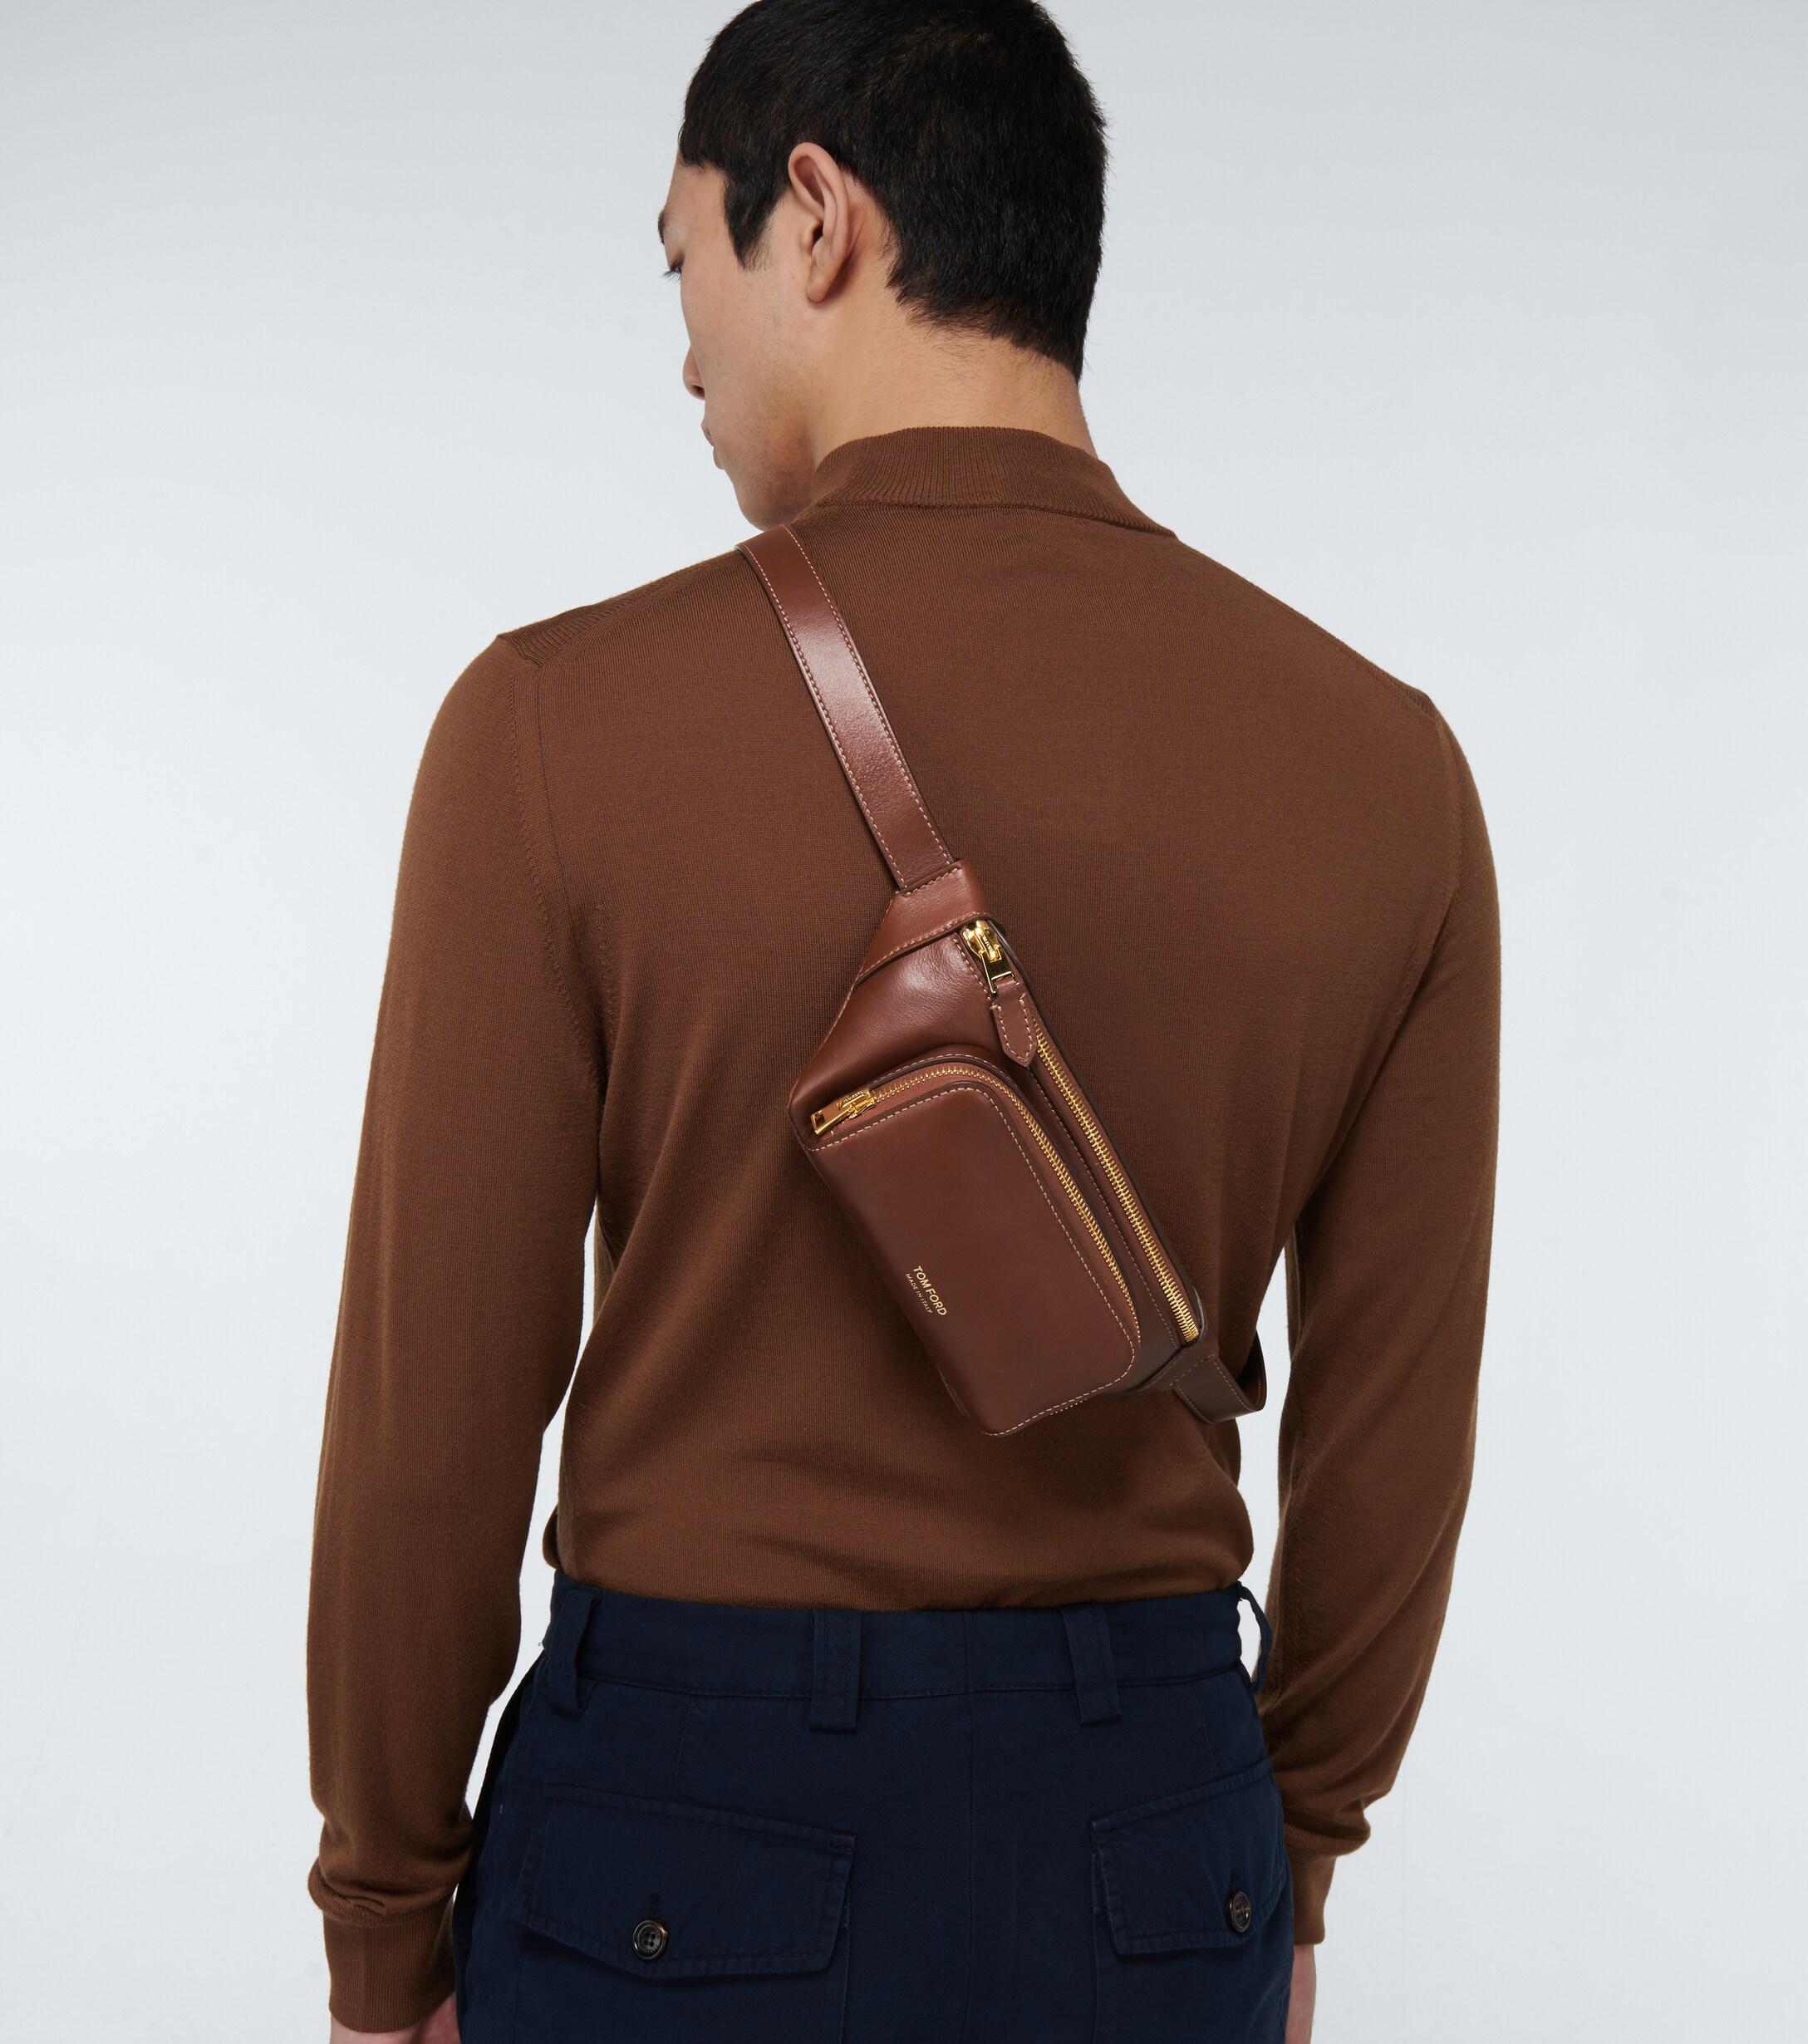 Tom Ford Leather Belt Bag in Brown for Men | Lyst